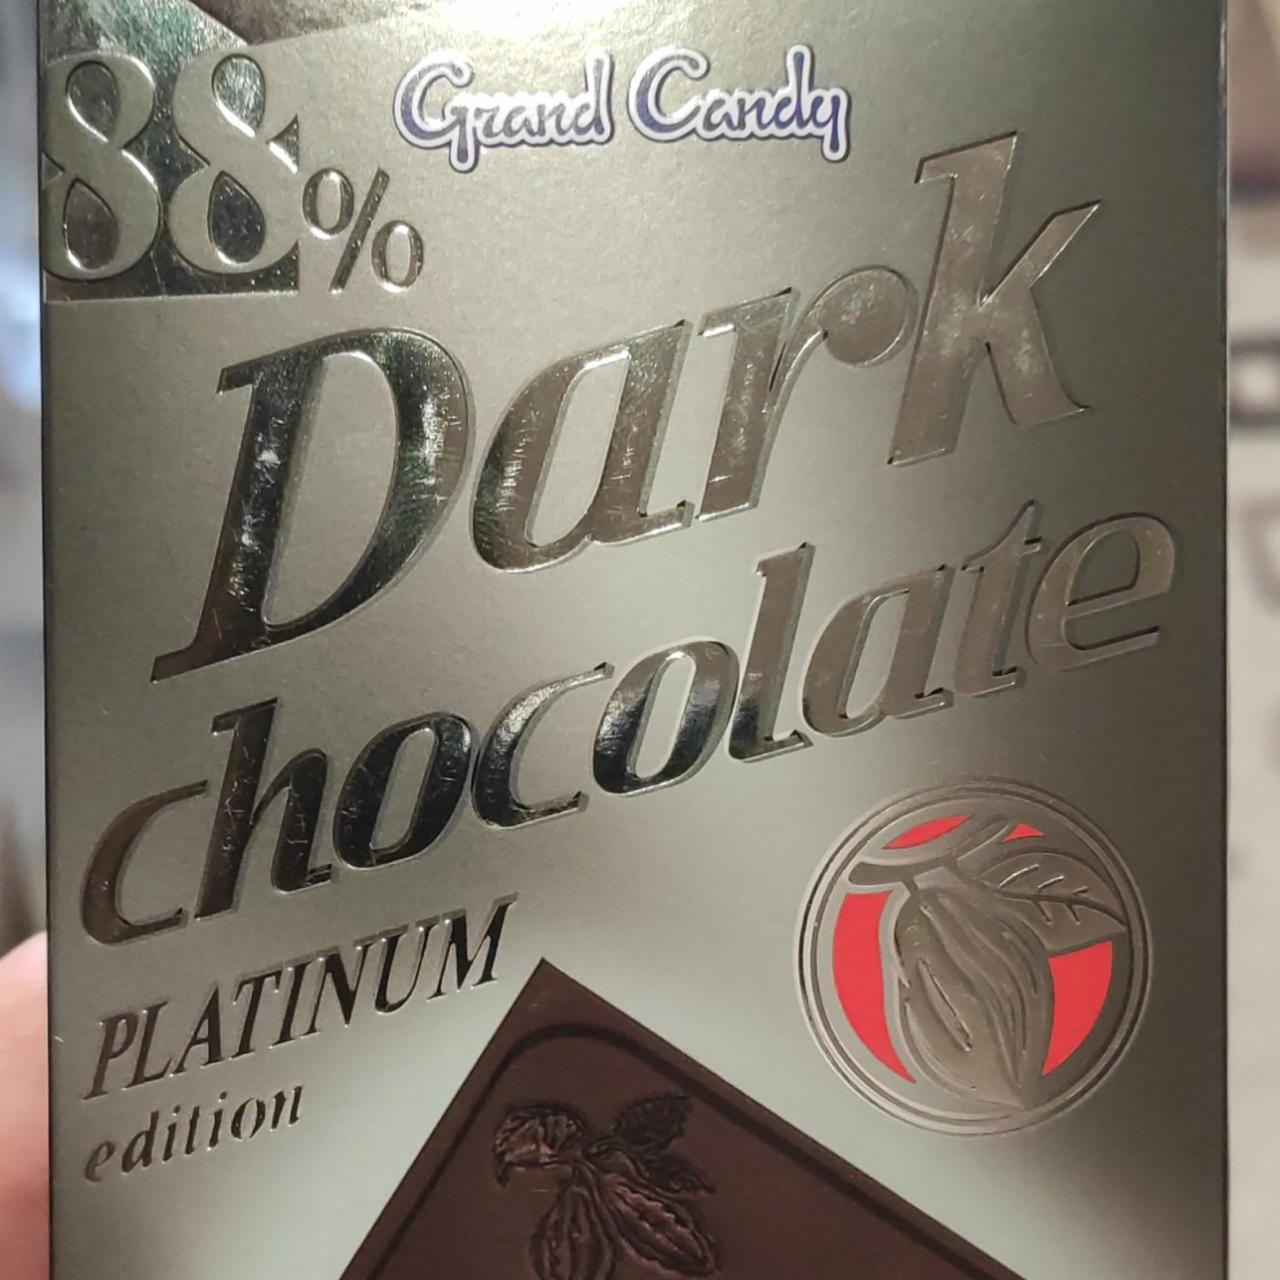 Фото - Темный шоколад 88% Dark chocolate / Platinum edition Grand Candy